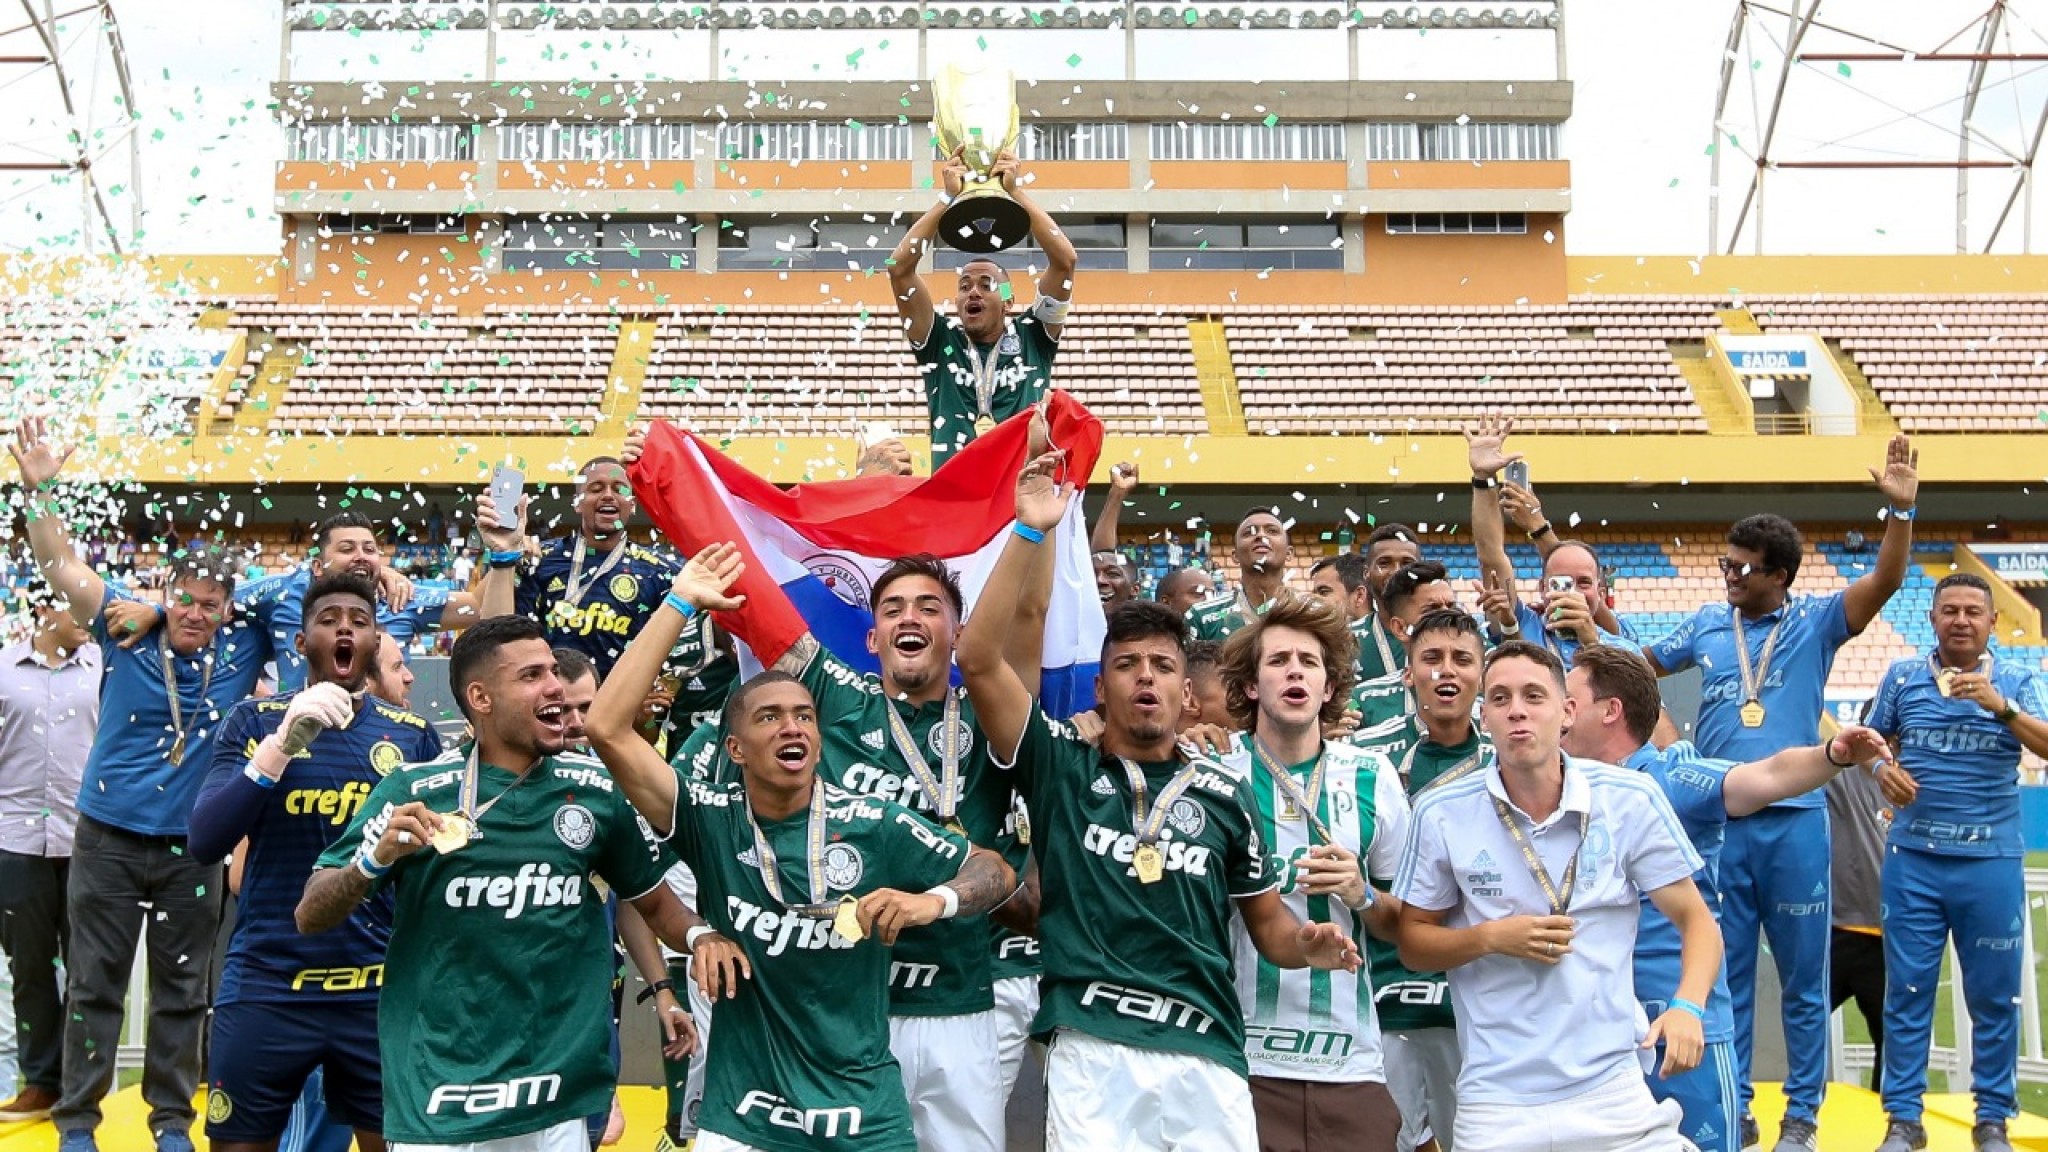 Finalistas do Campeonato Paulista Sub-20 foram definidos, vem conferir